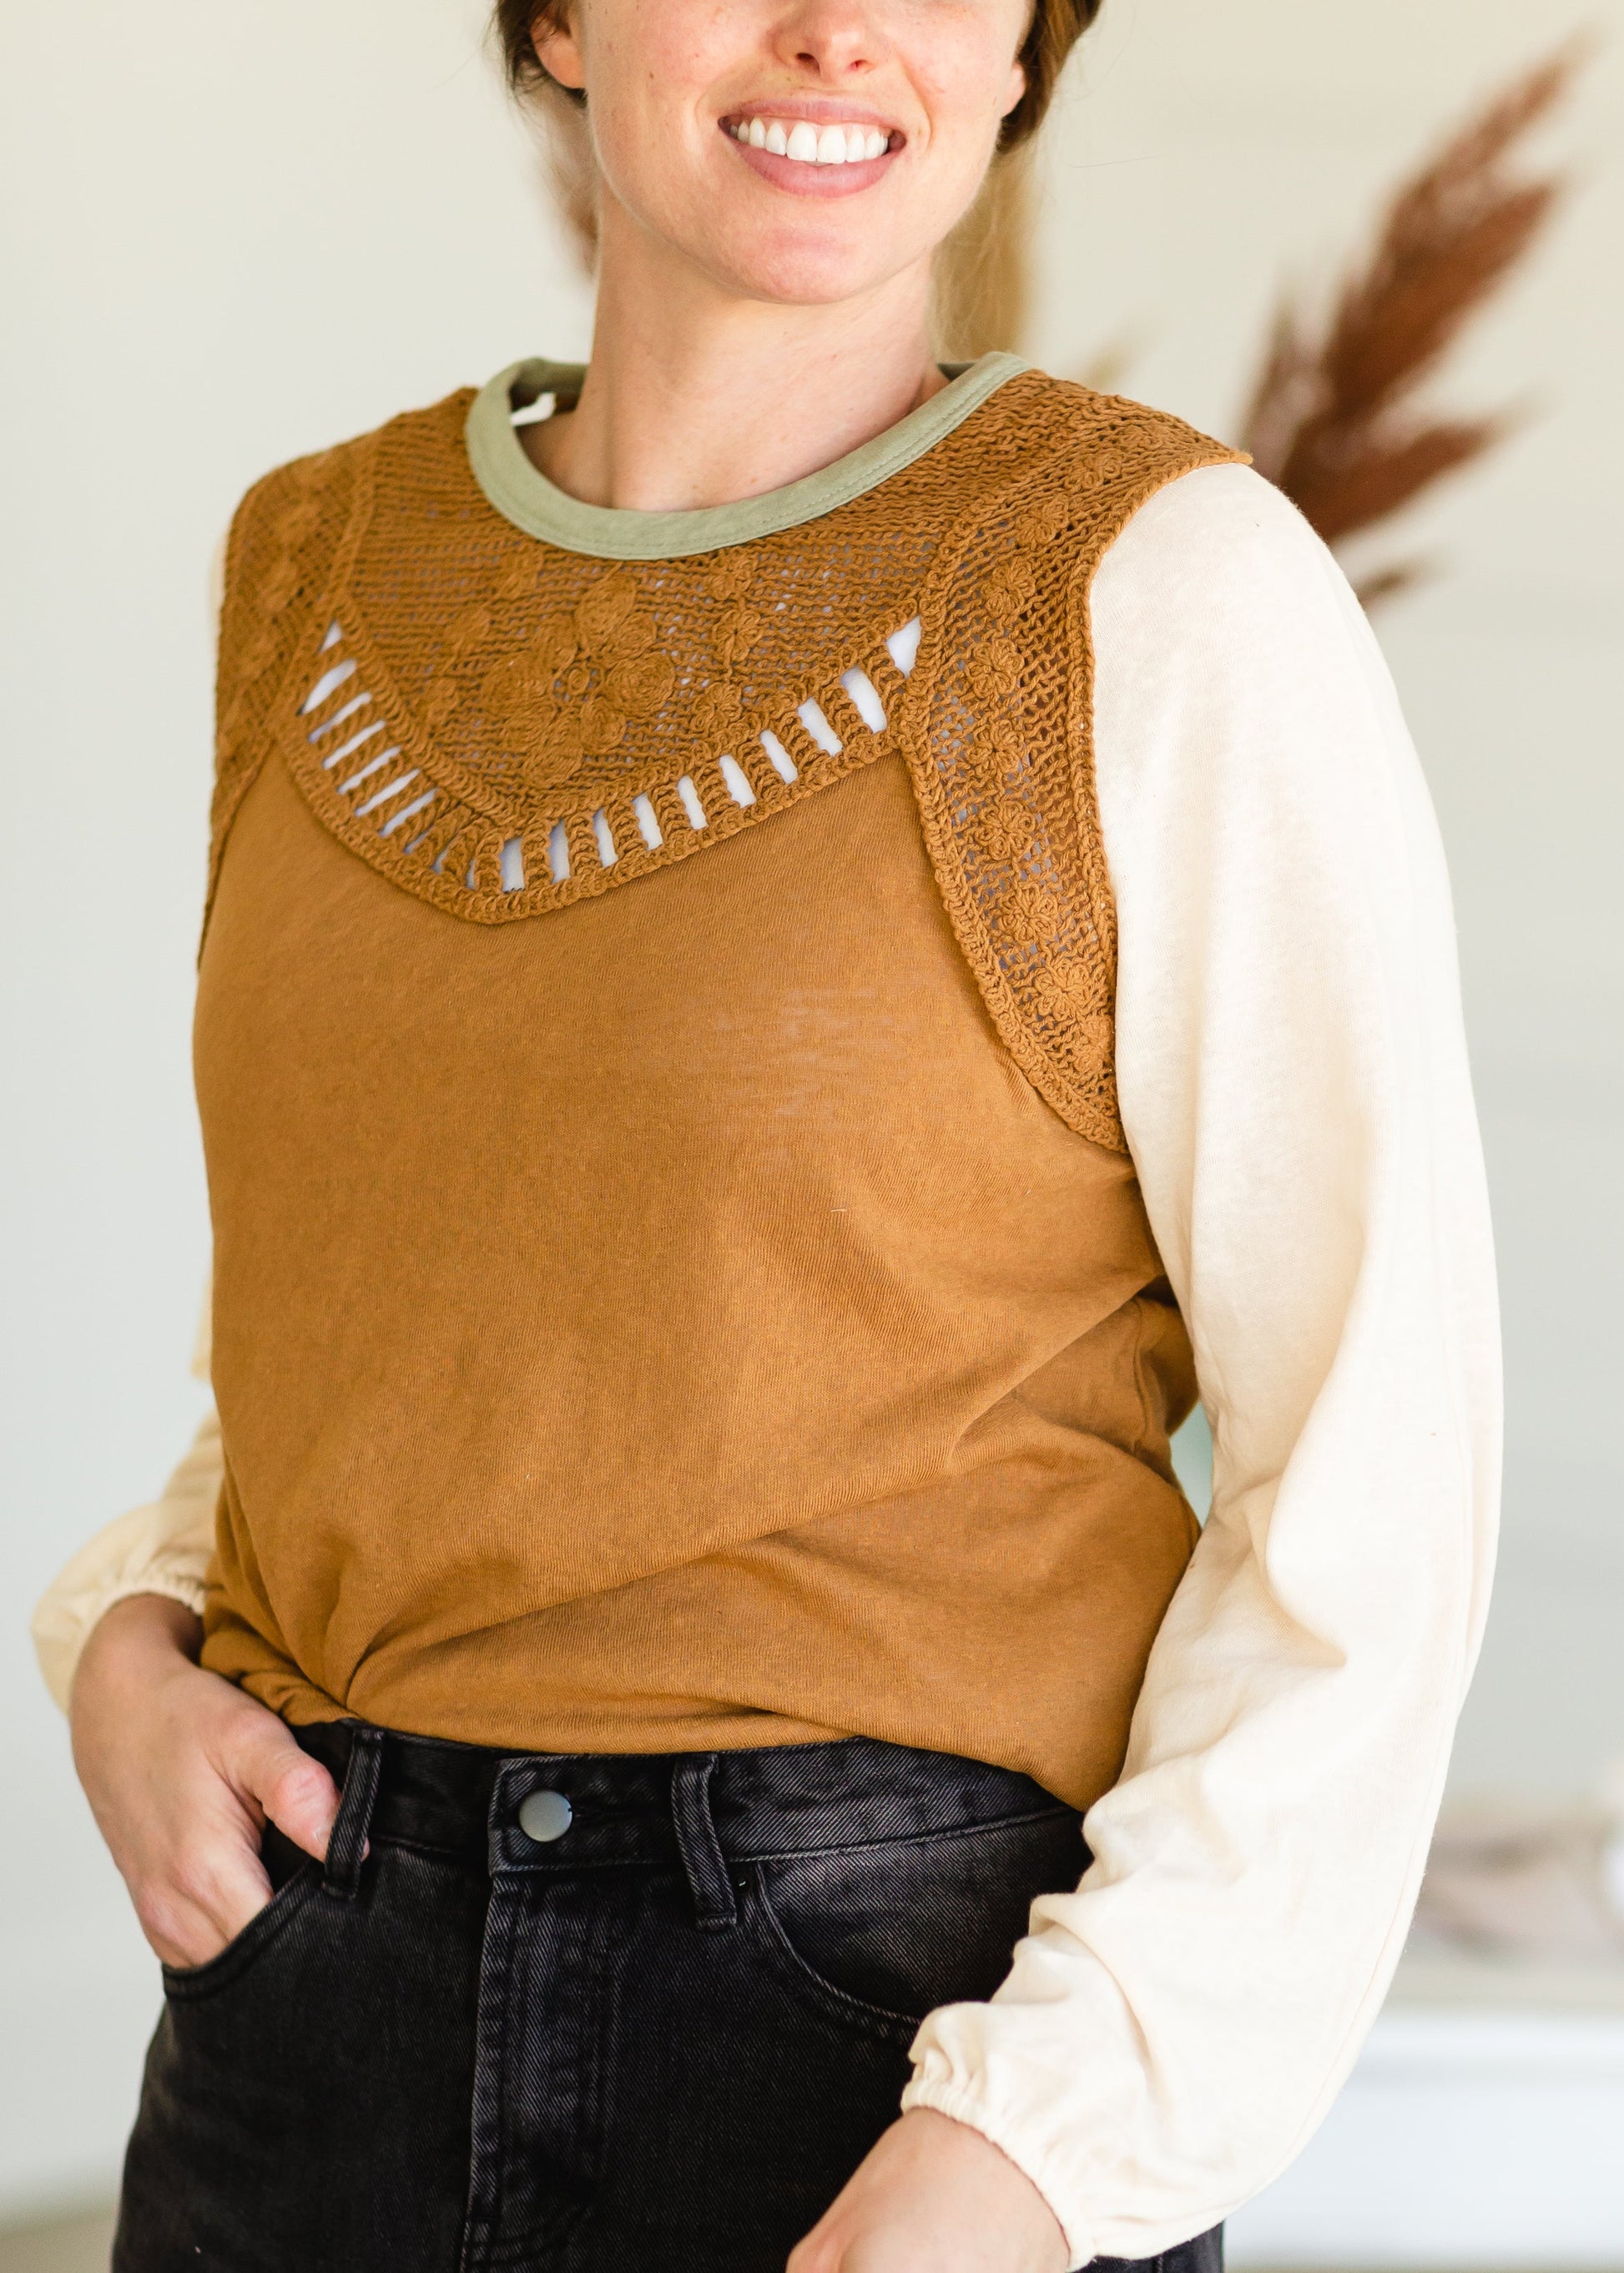 Crochet Colorblock Knit Top - FINAL SALE Shirt